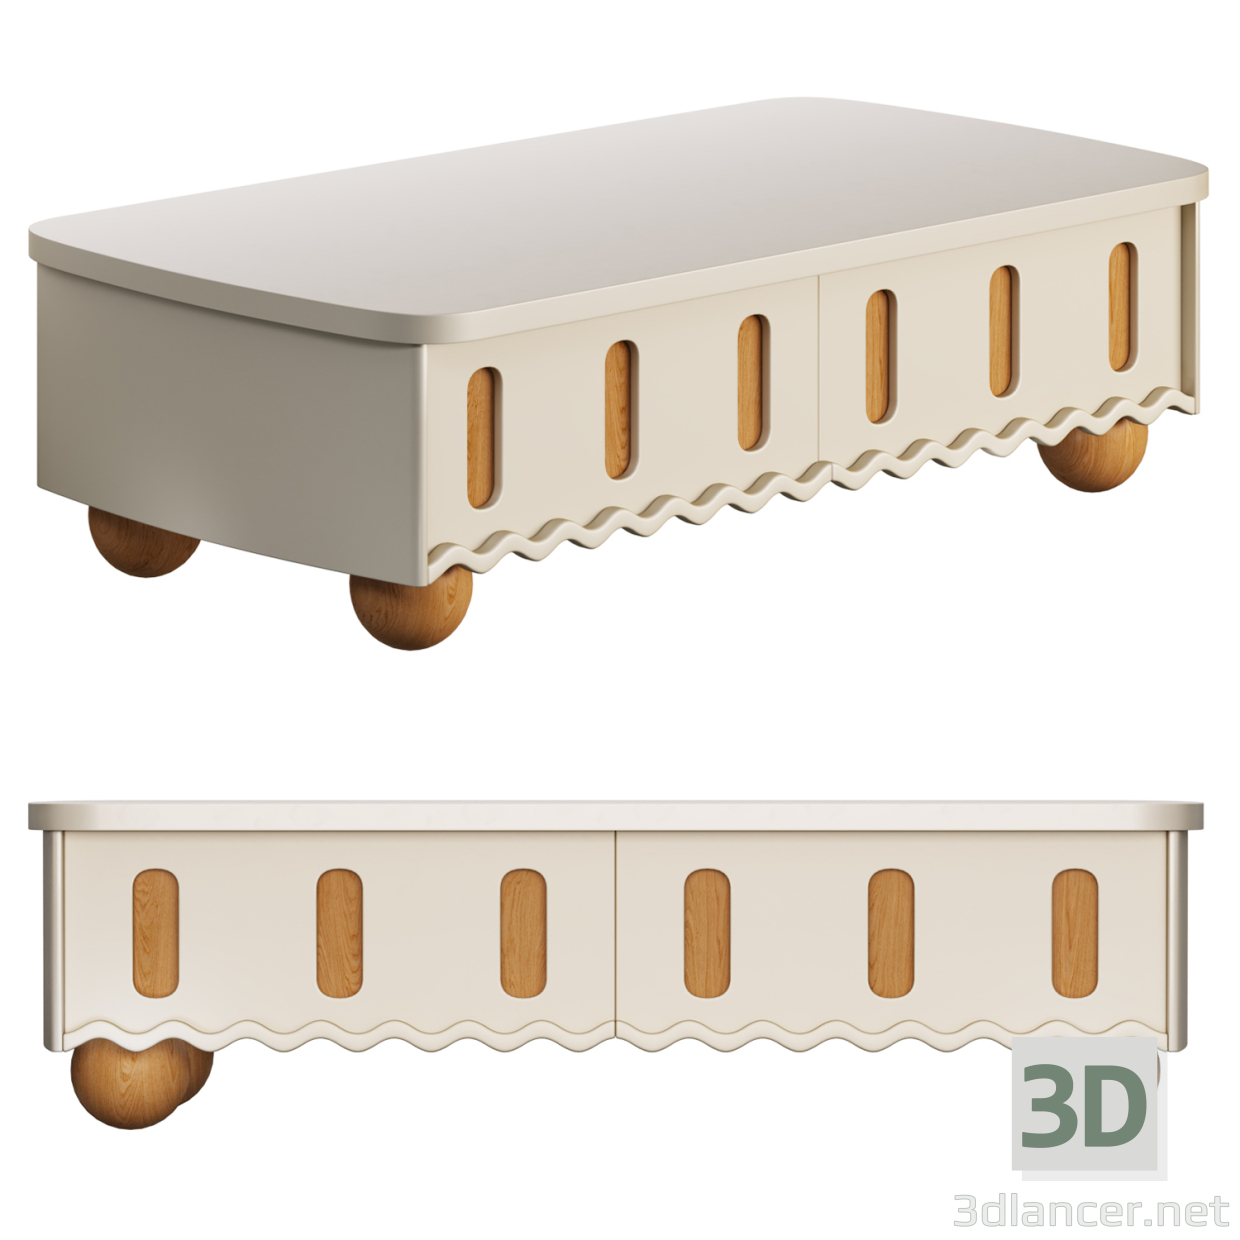 3d Coffee table LHY model buy - render